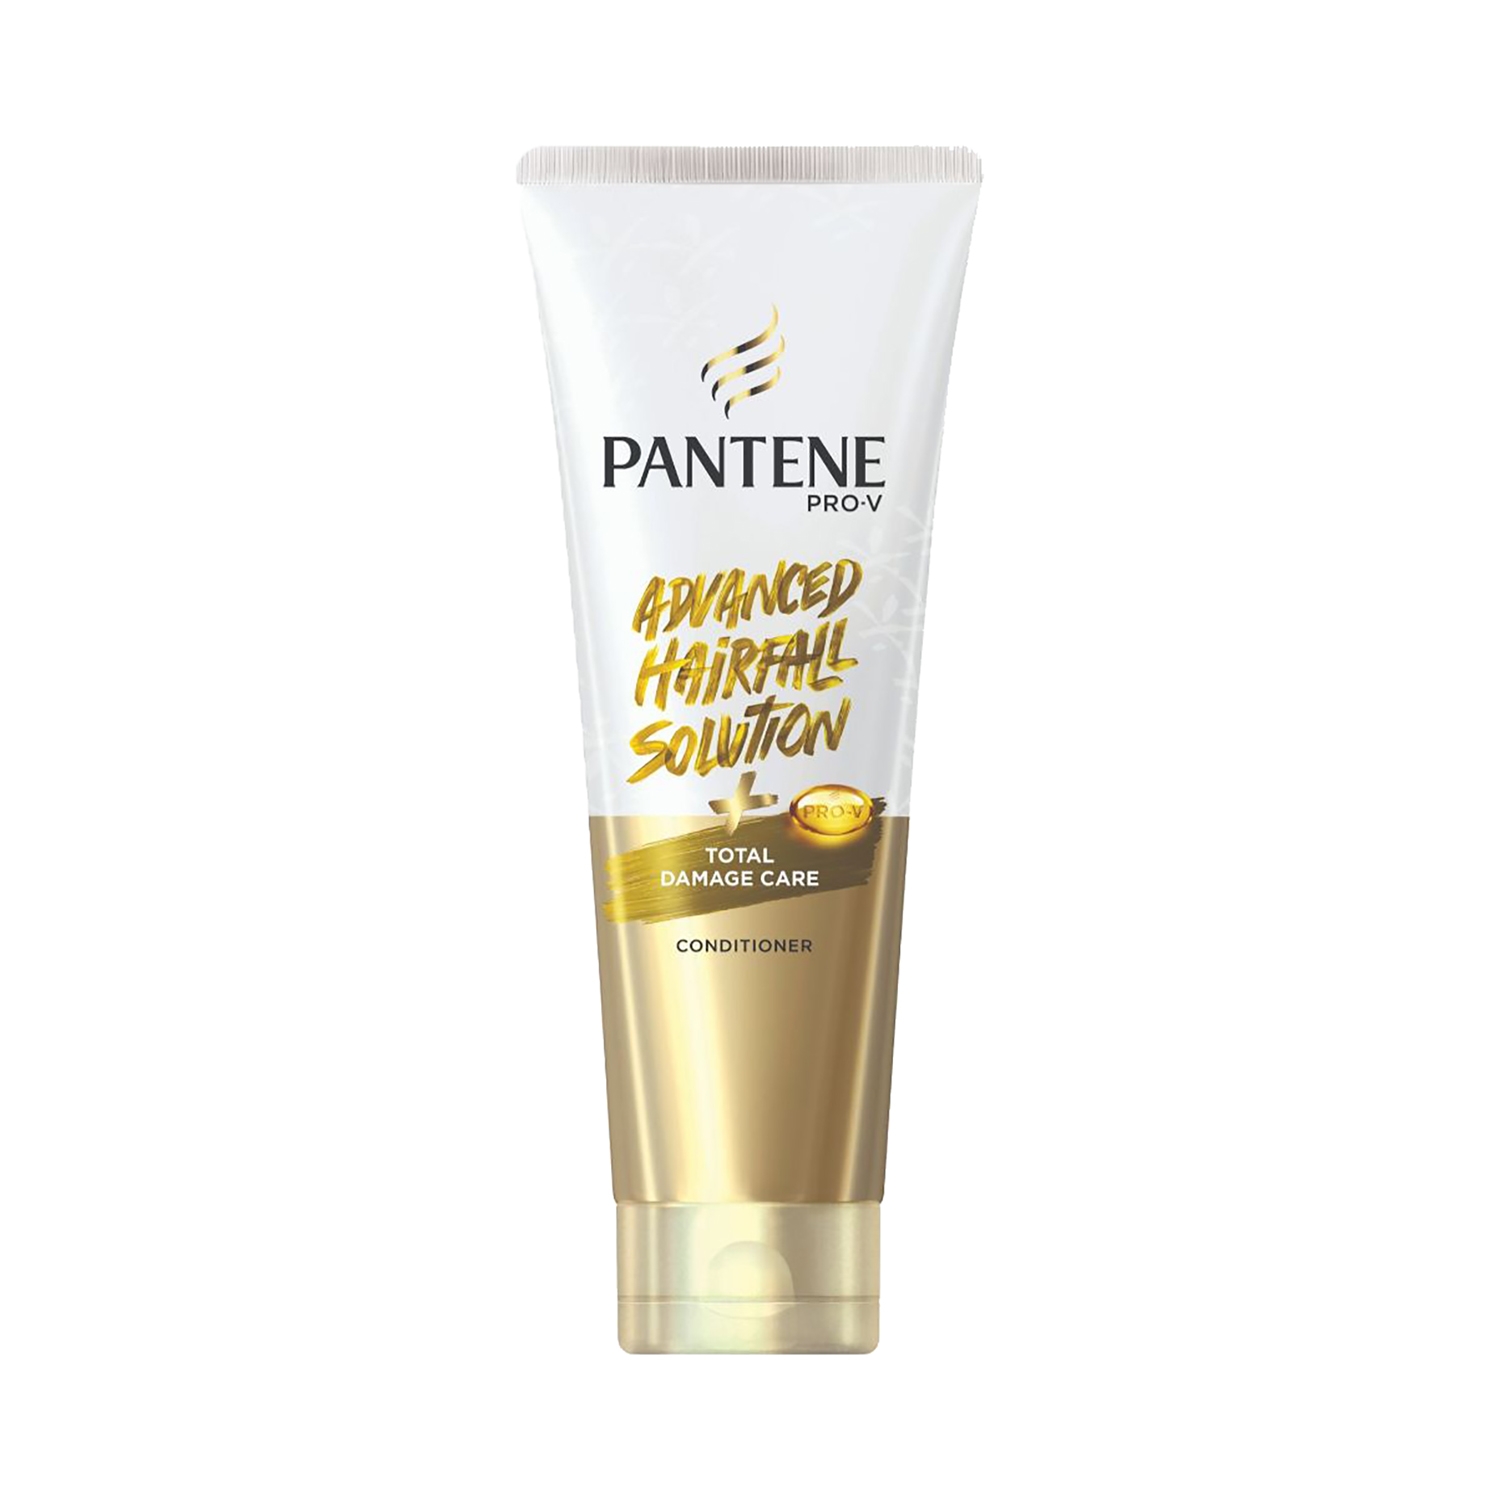 Pantene | Pantene Advanced Hairfall Solution Anti-Hairfall Total Damage Care Conditioner (180ml)